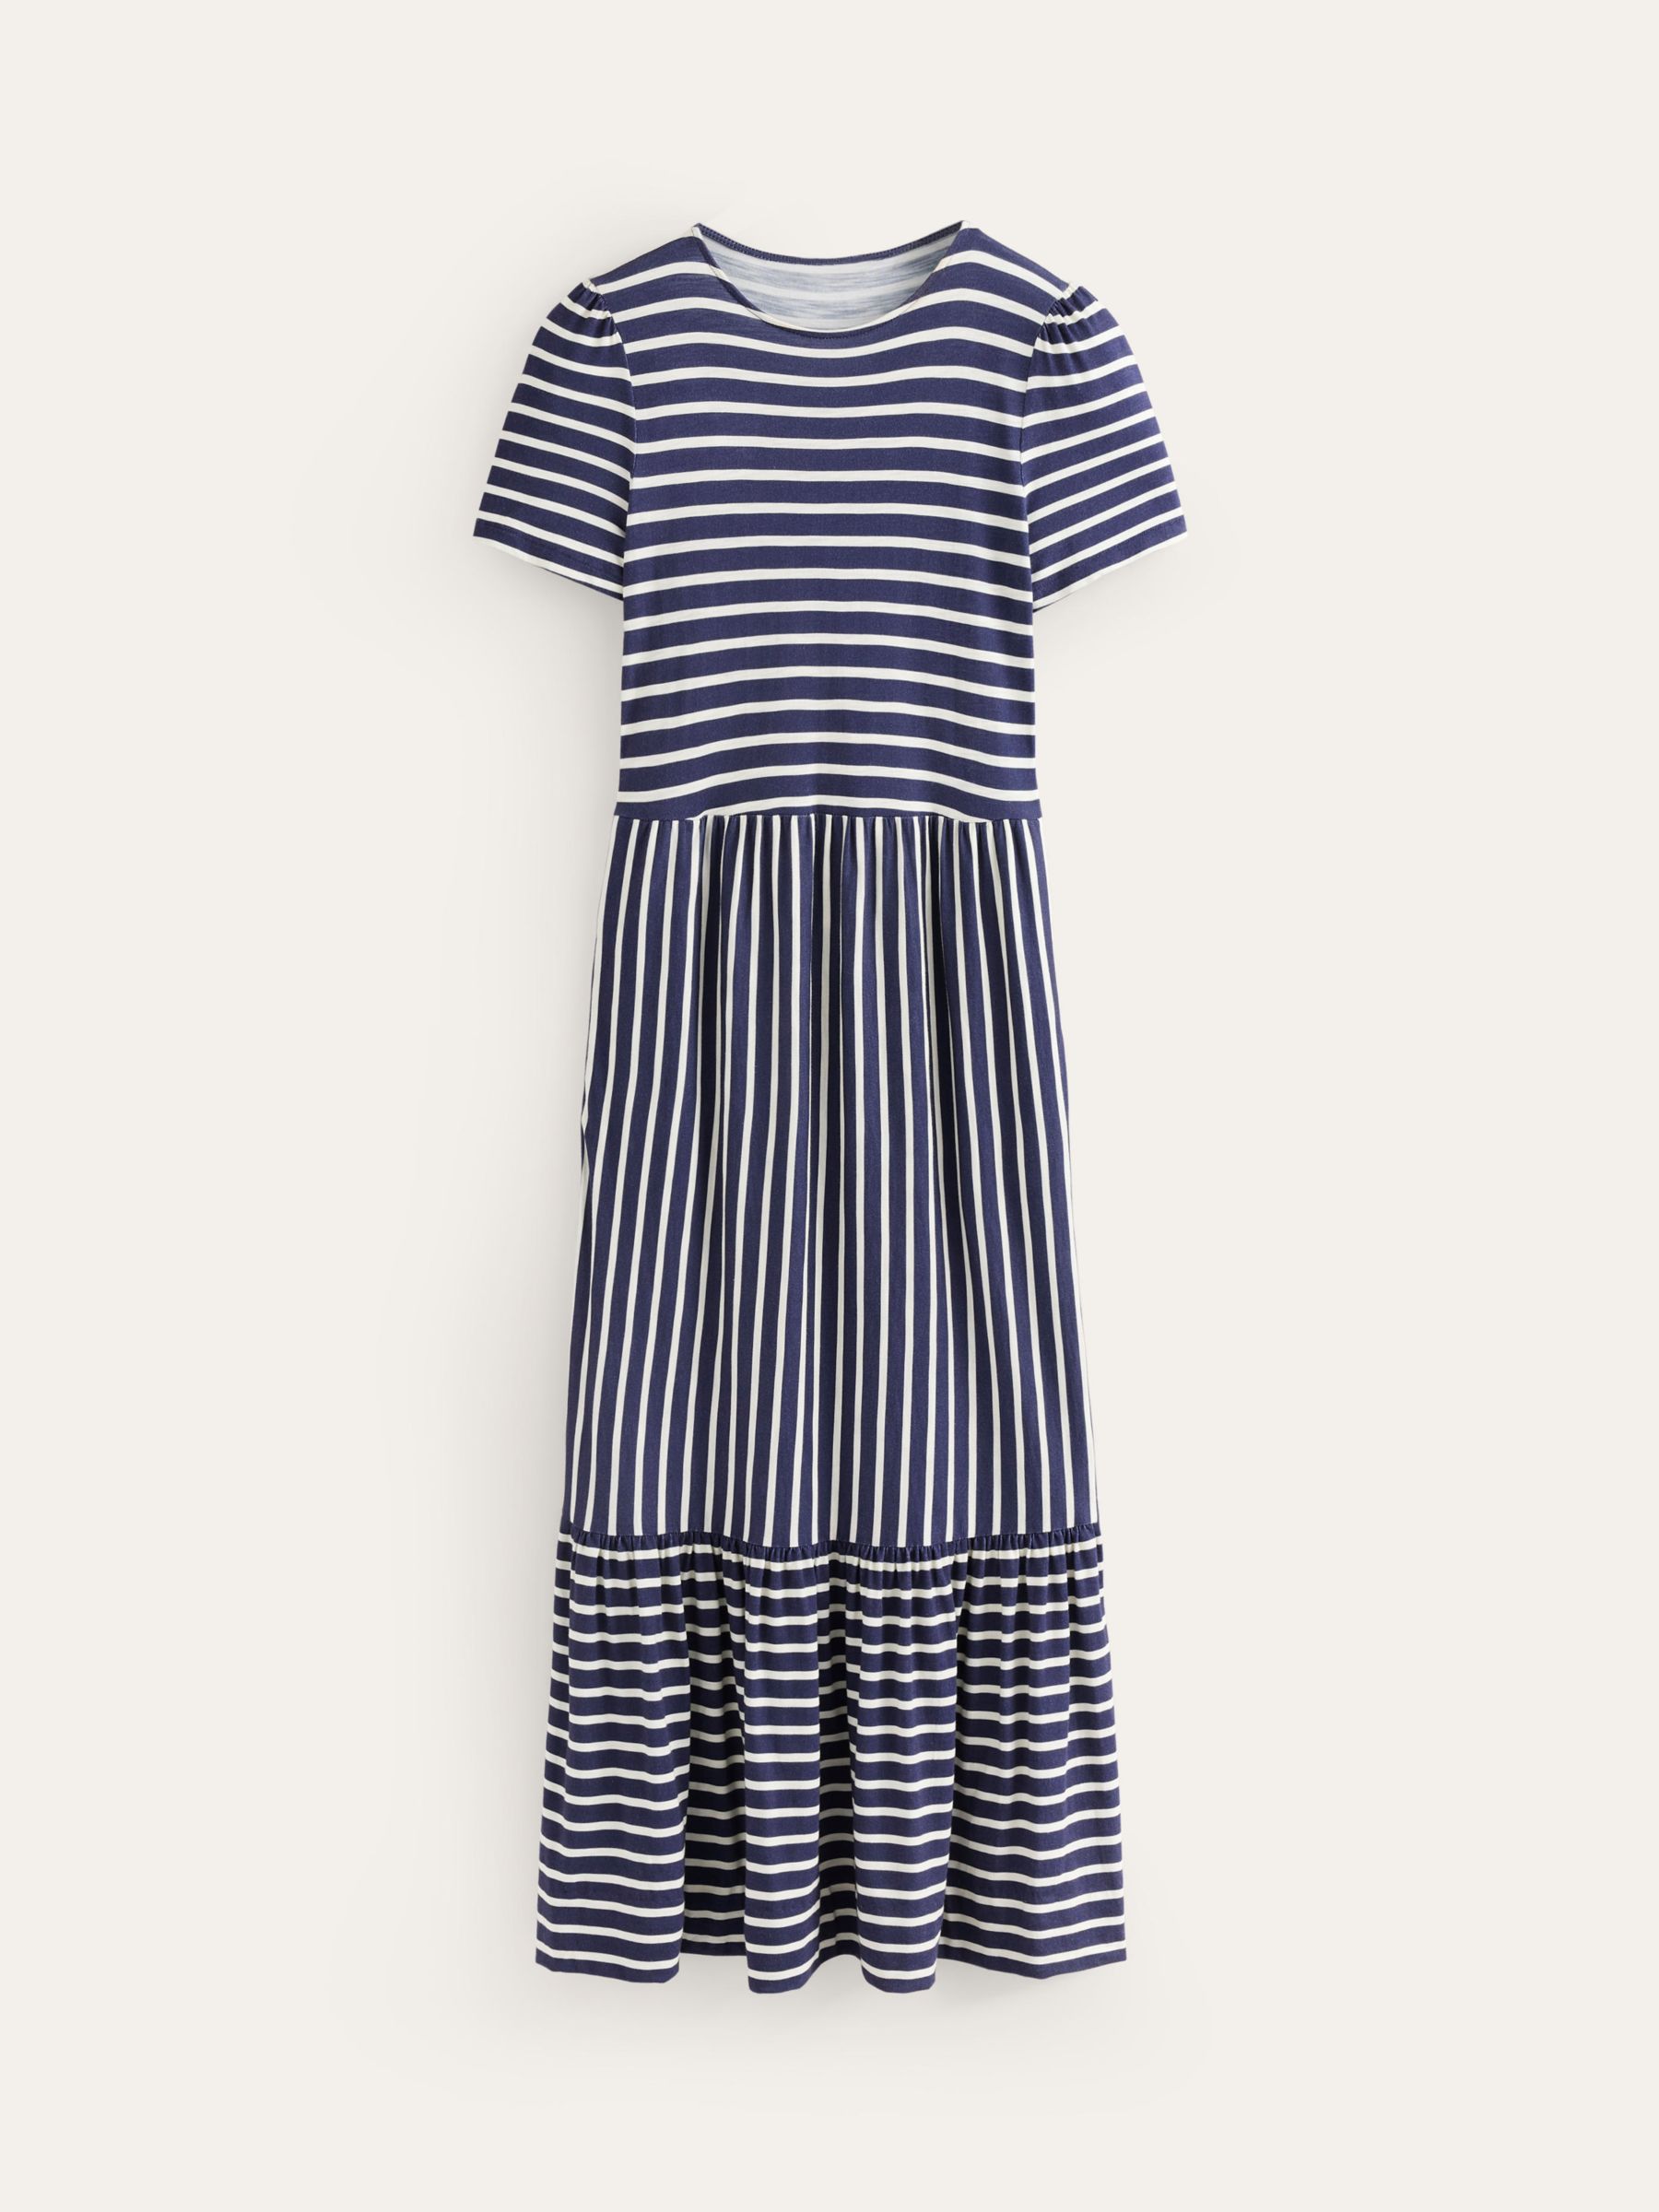 Boden Emma Stripe Tiered Midi Dress, Navy/Ivory, 8